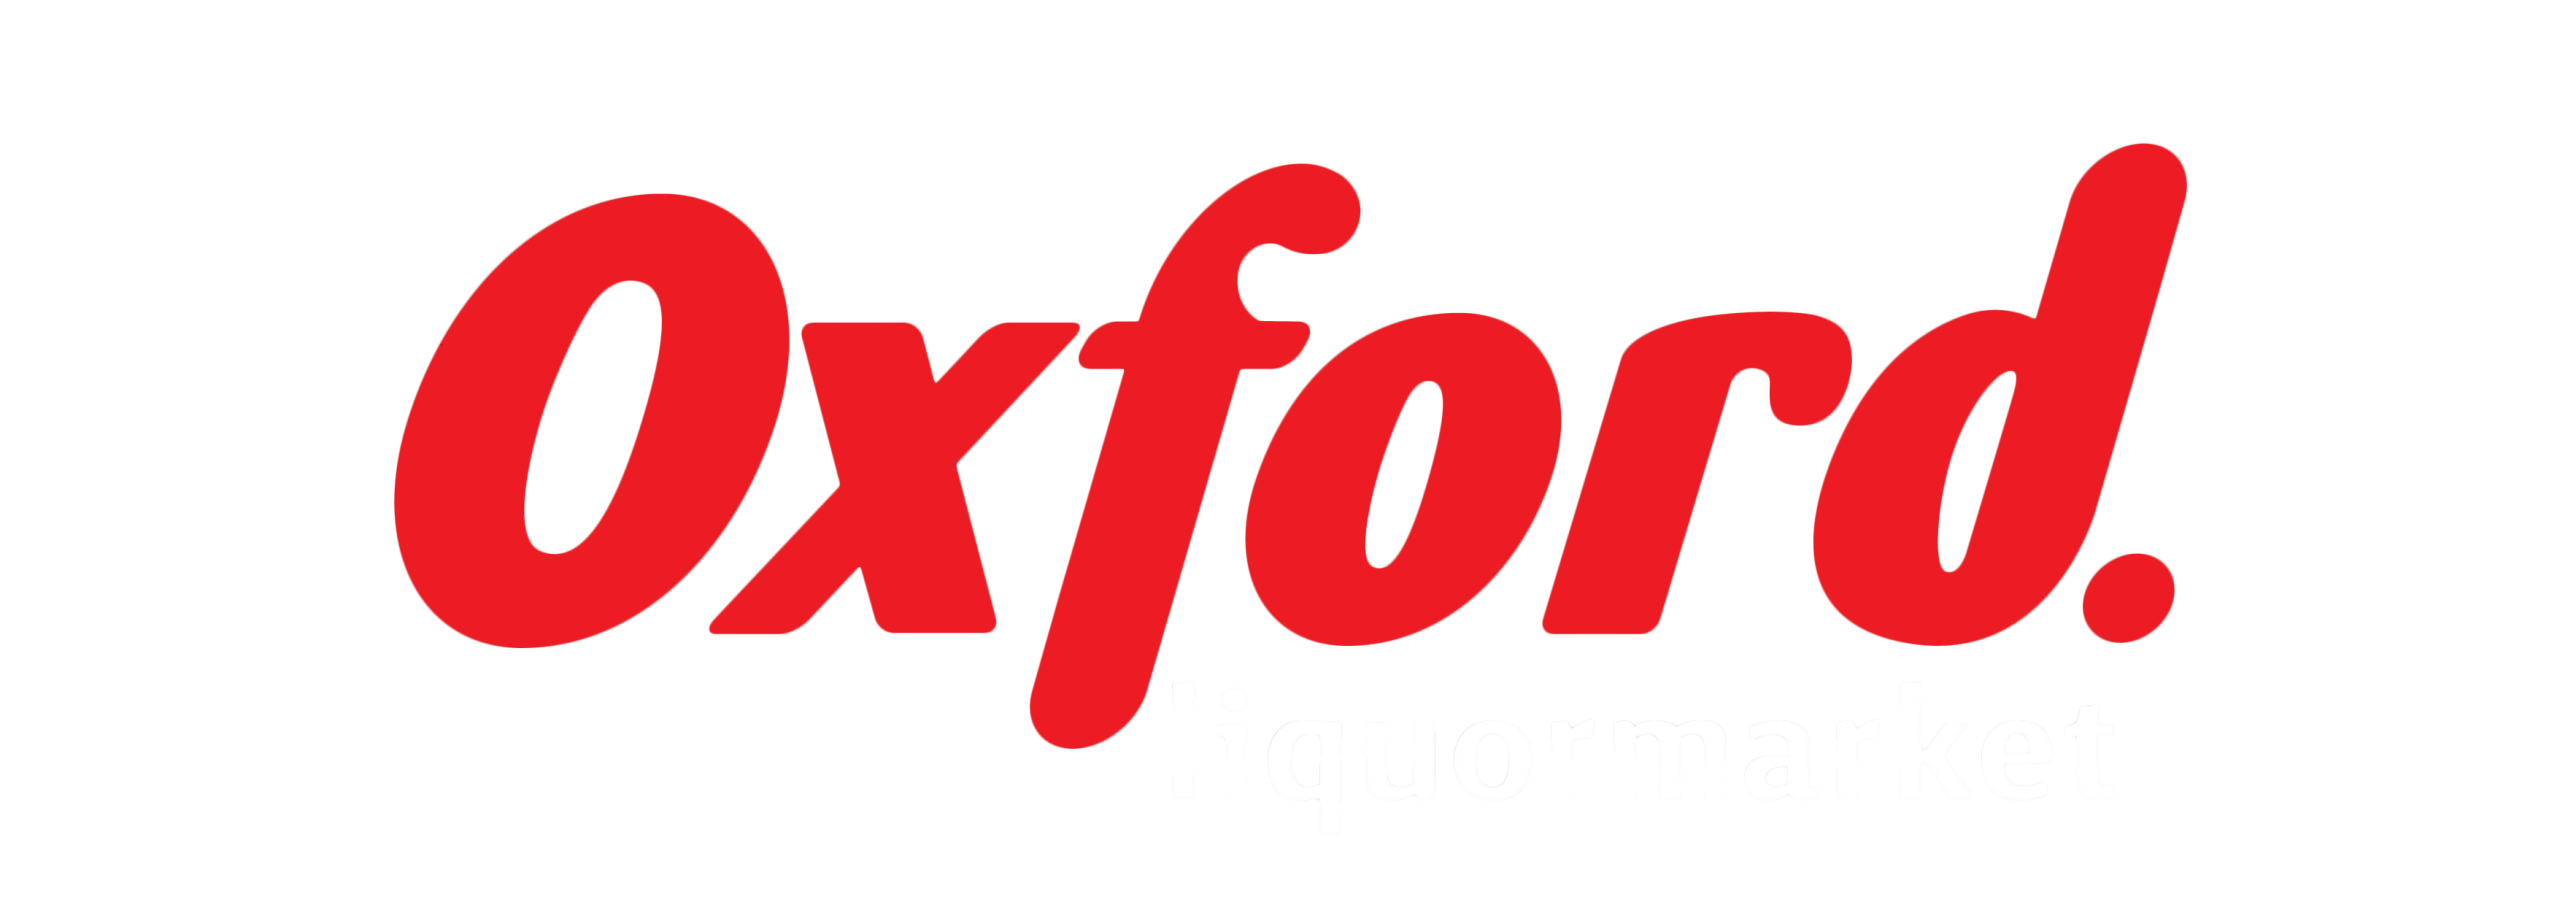 Oxford Liquormarket